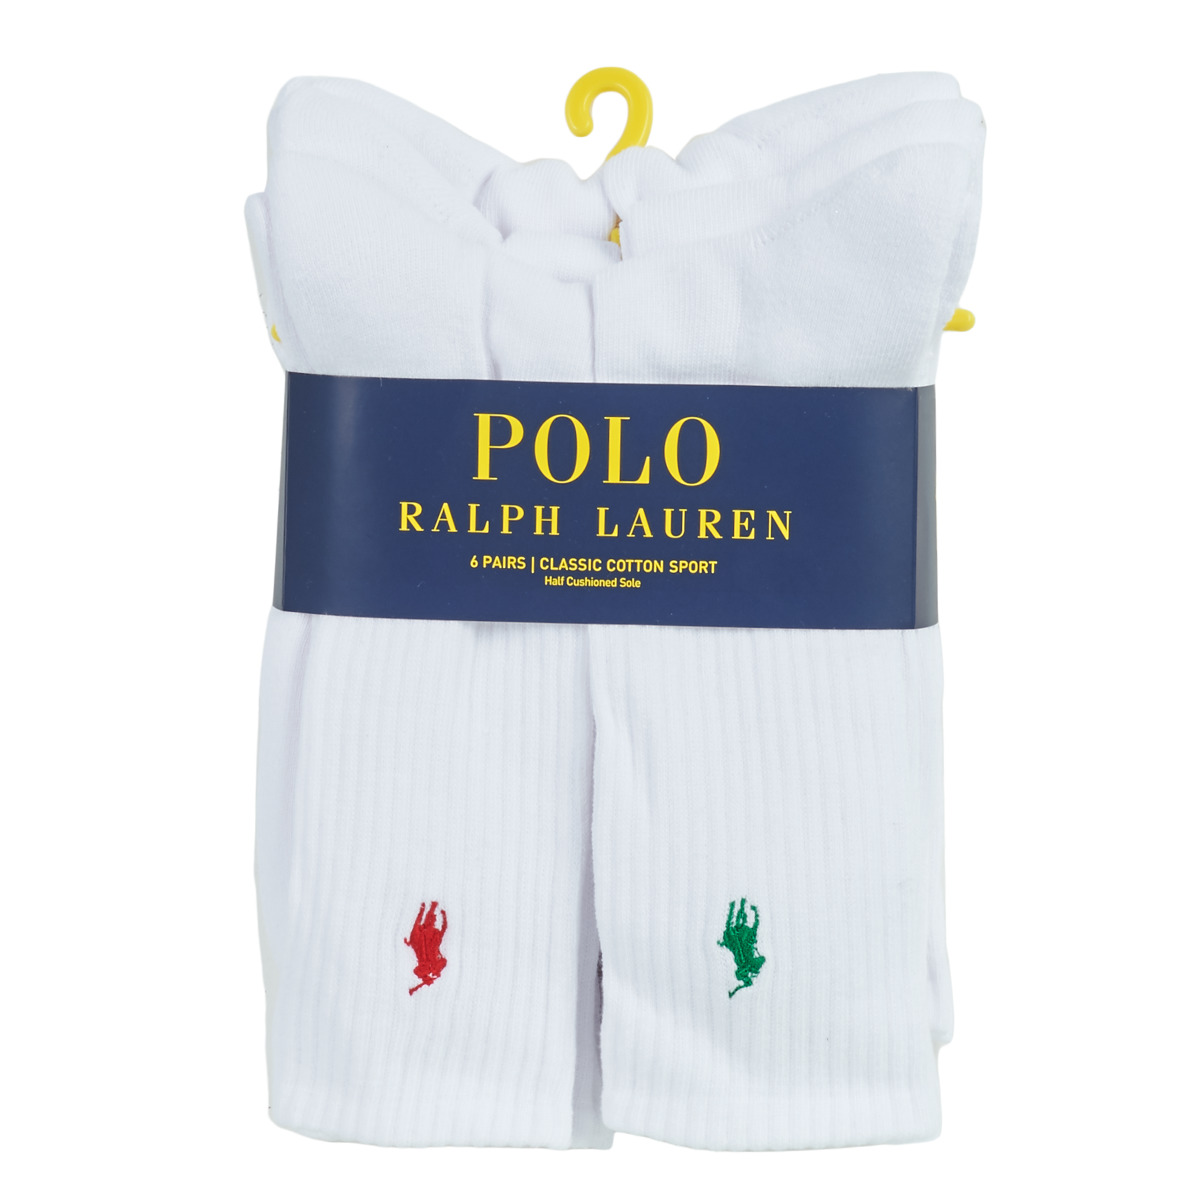 Shoe accessories Sports socks Polo Ralph Lauren ASX110 6 PACK COTTON White